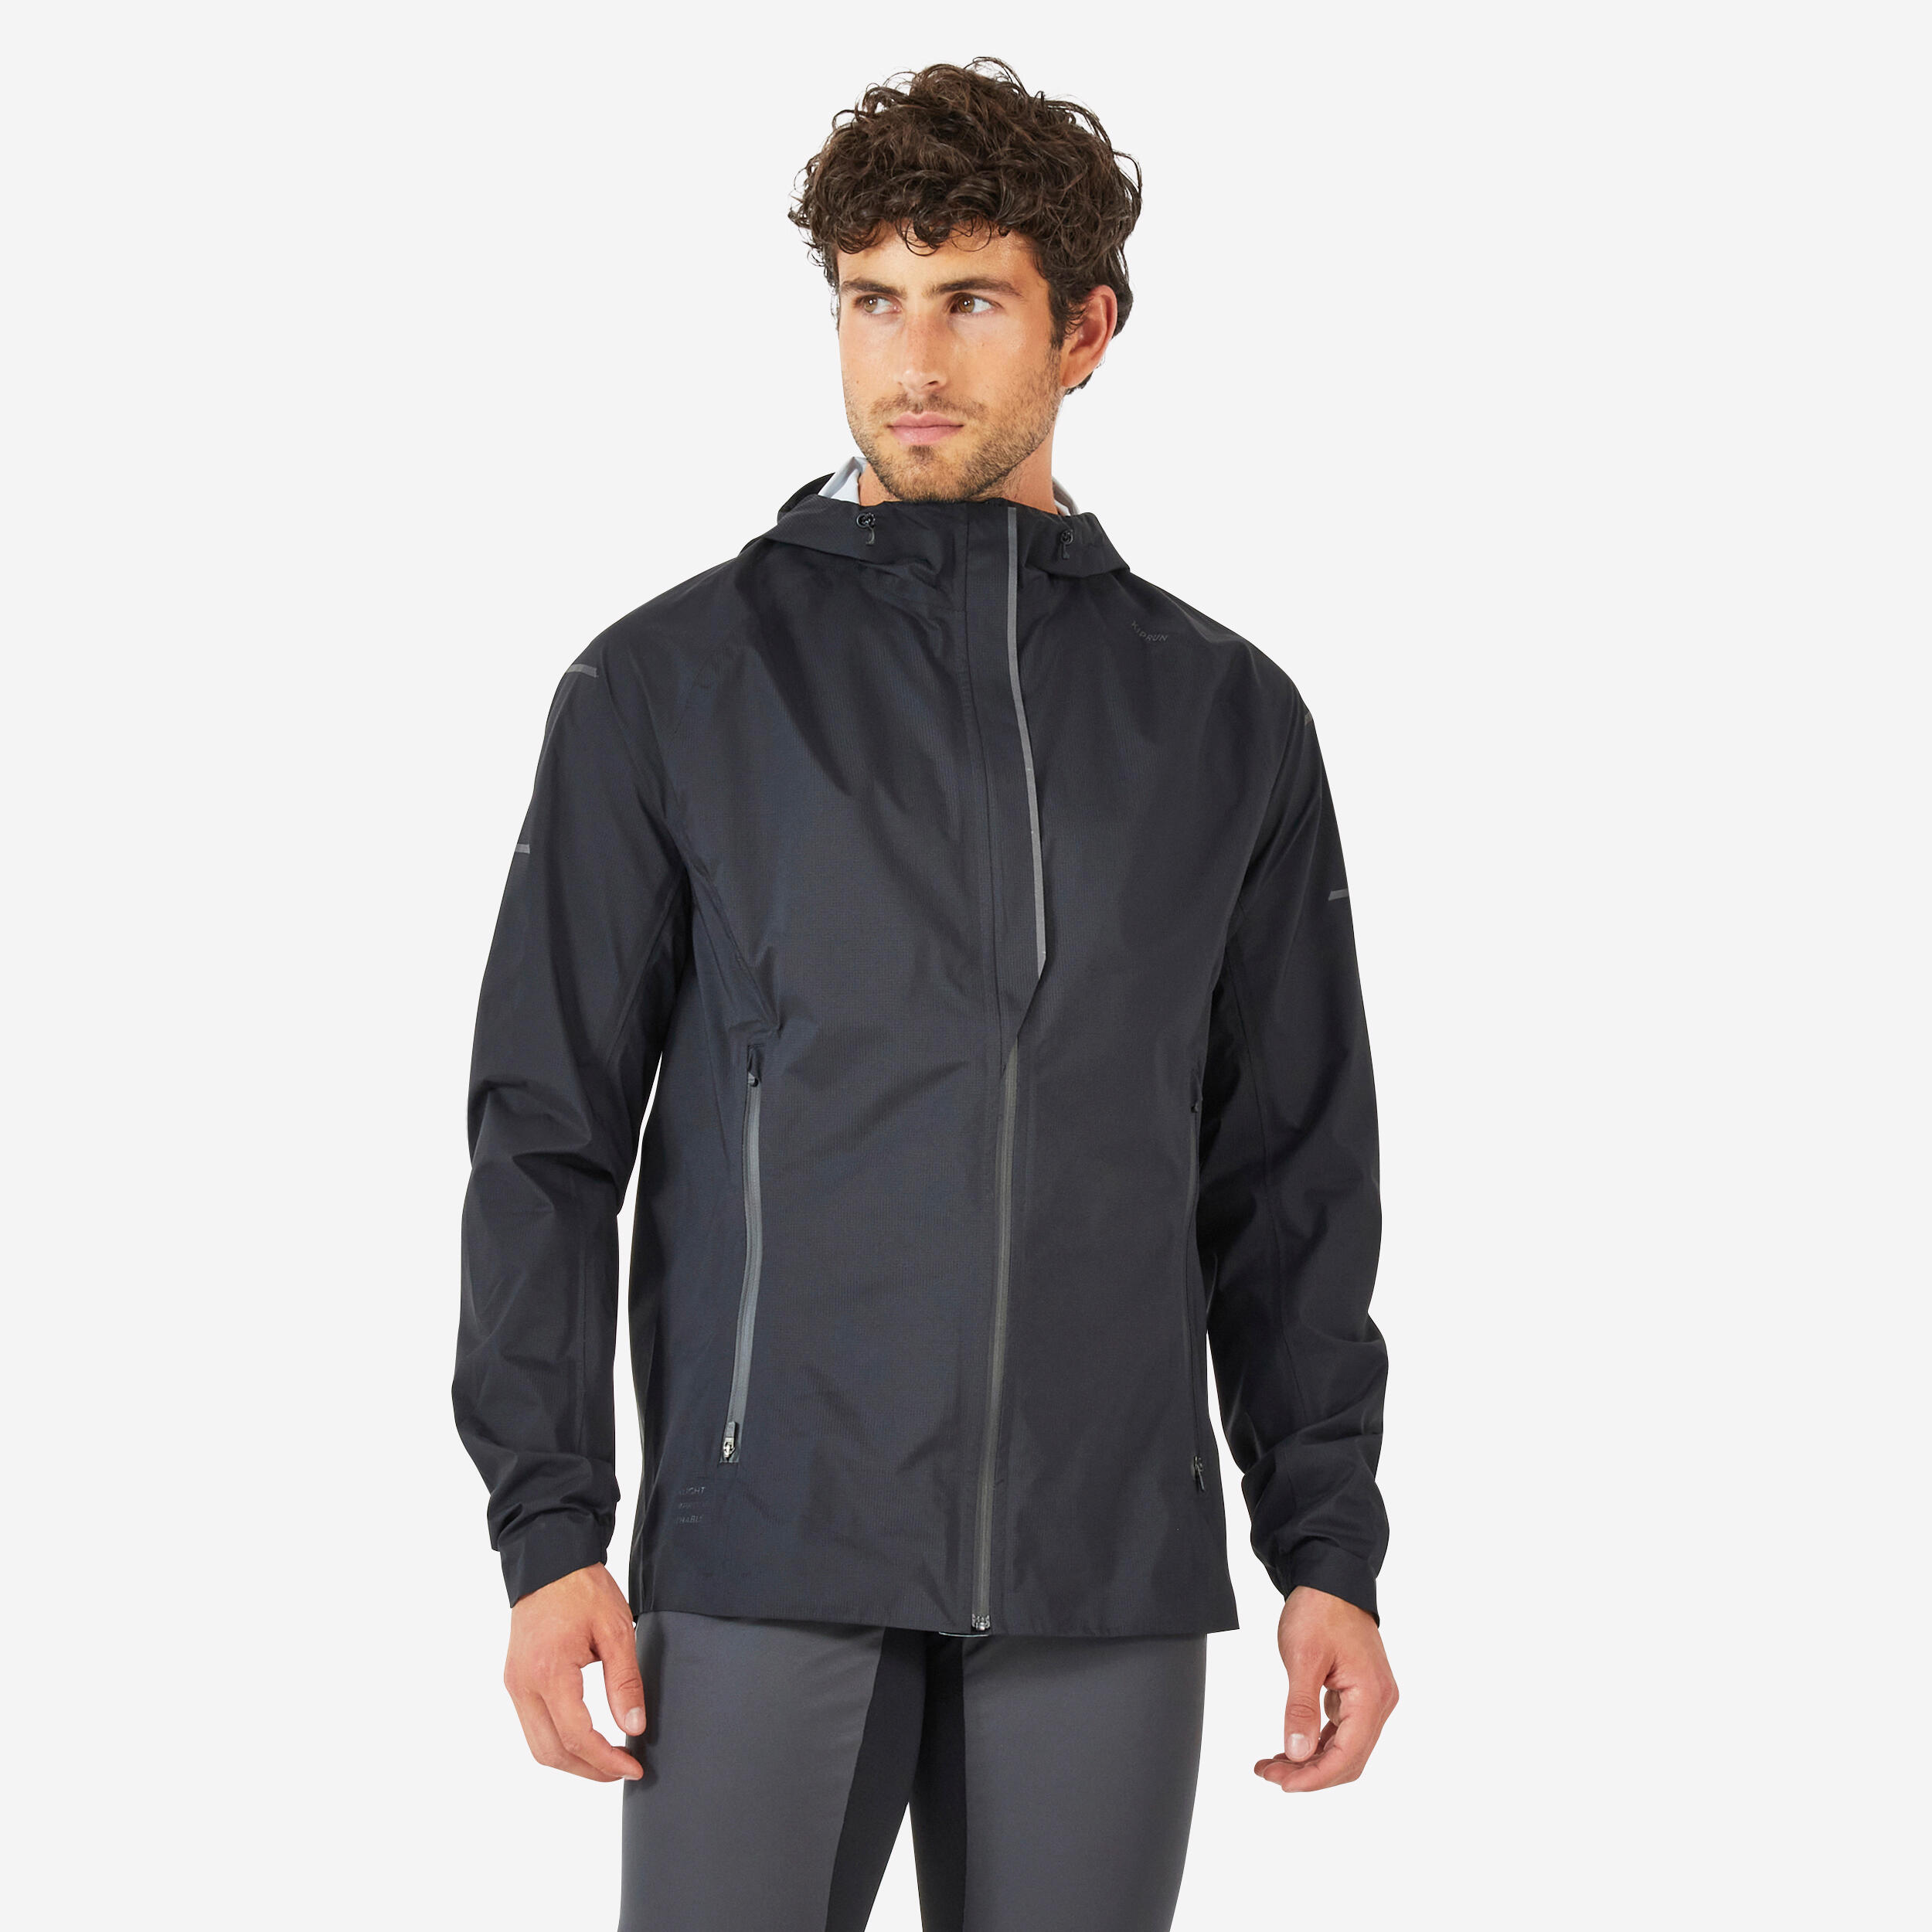 Image of Men’s Waterproof Rain Jacket - Rain+ Black